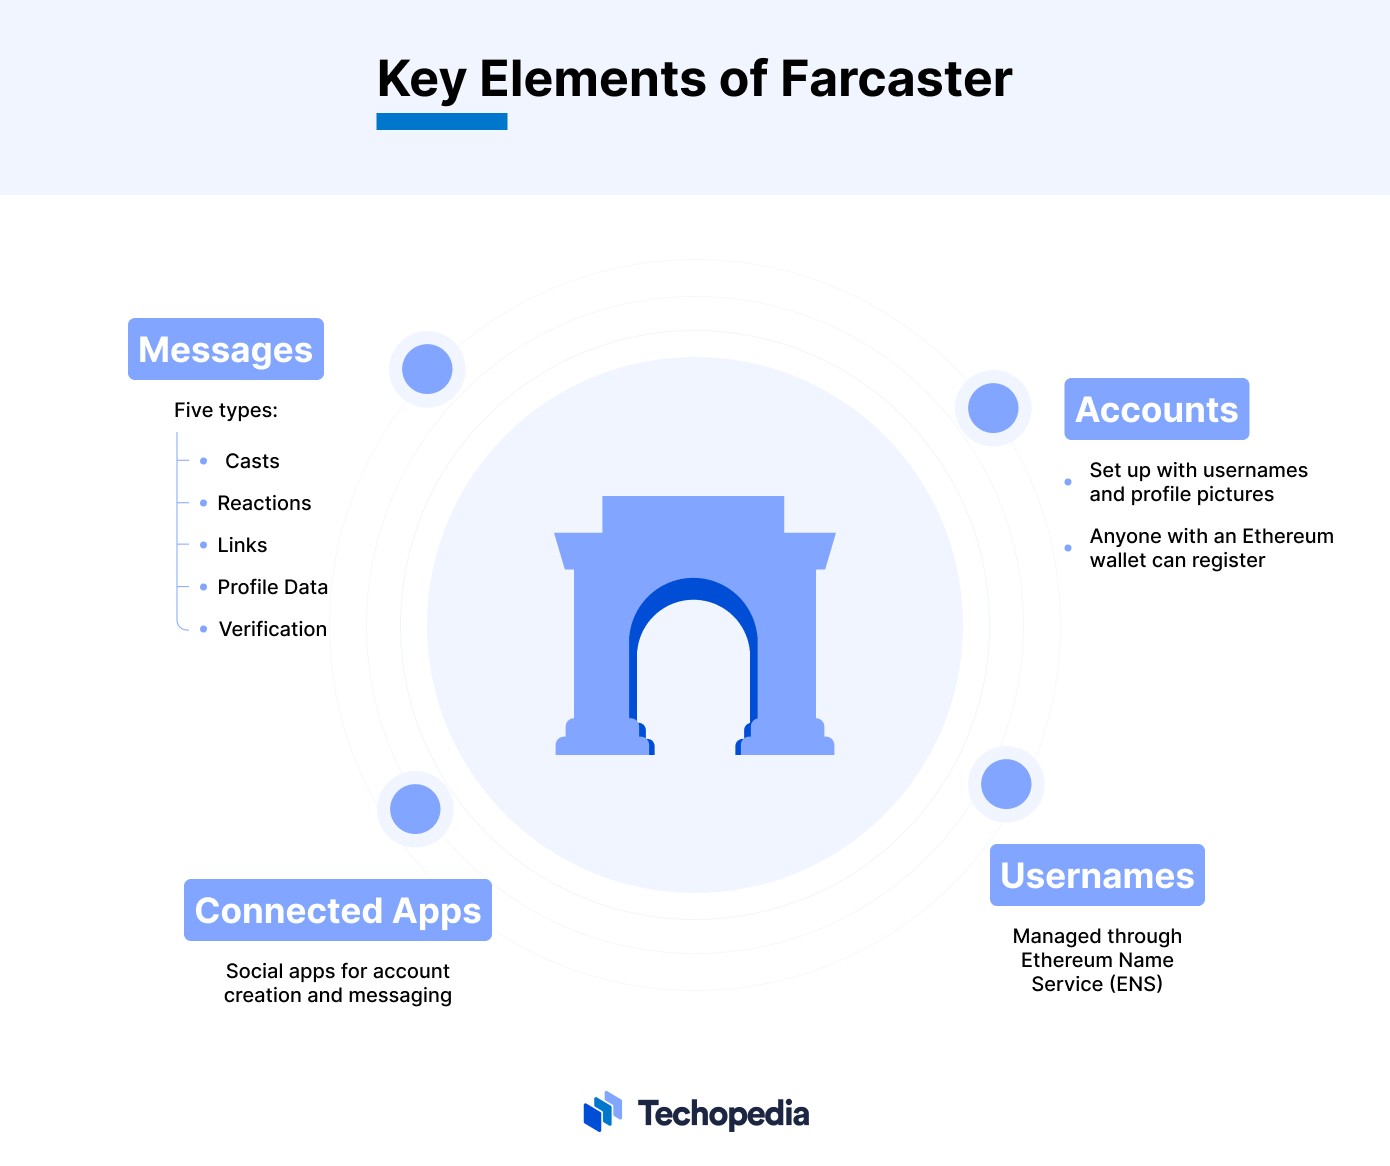 Key Elements of Farcaster